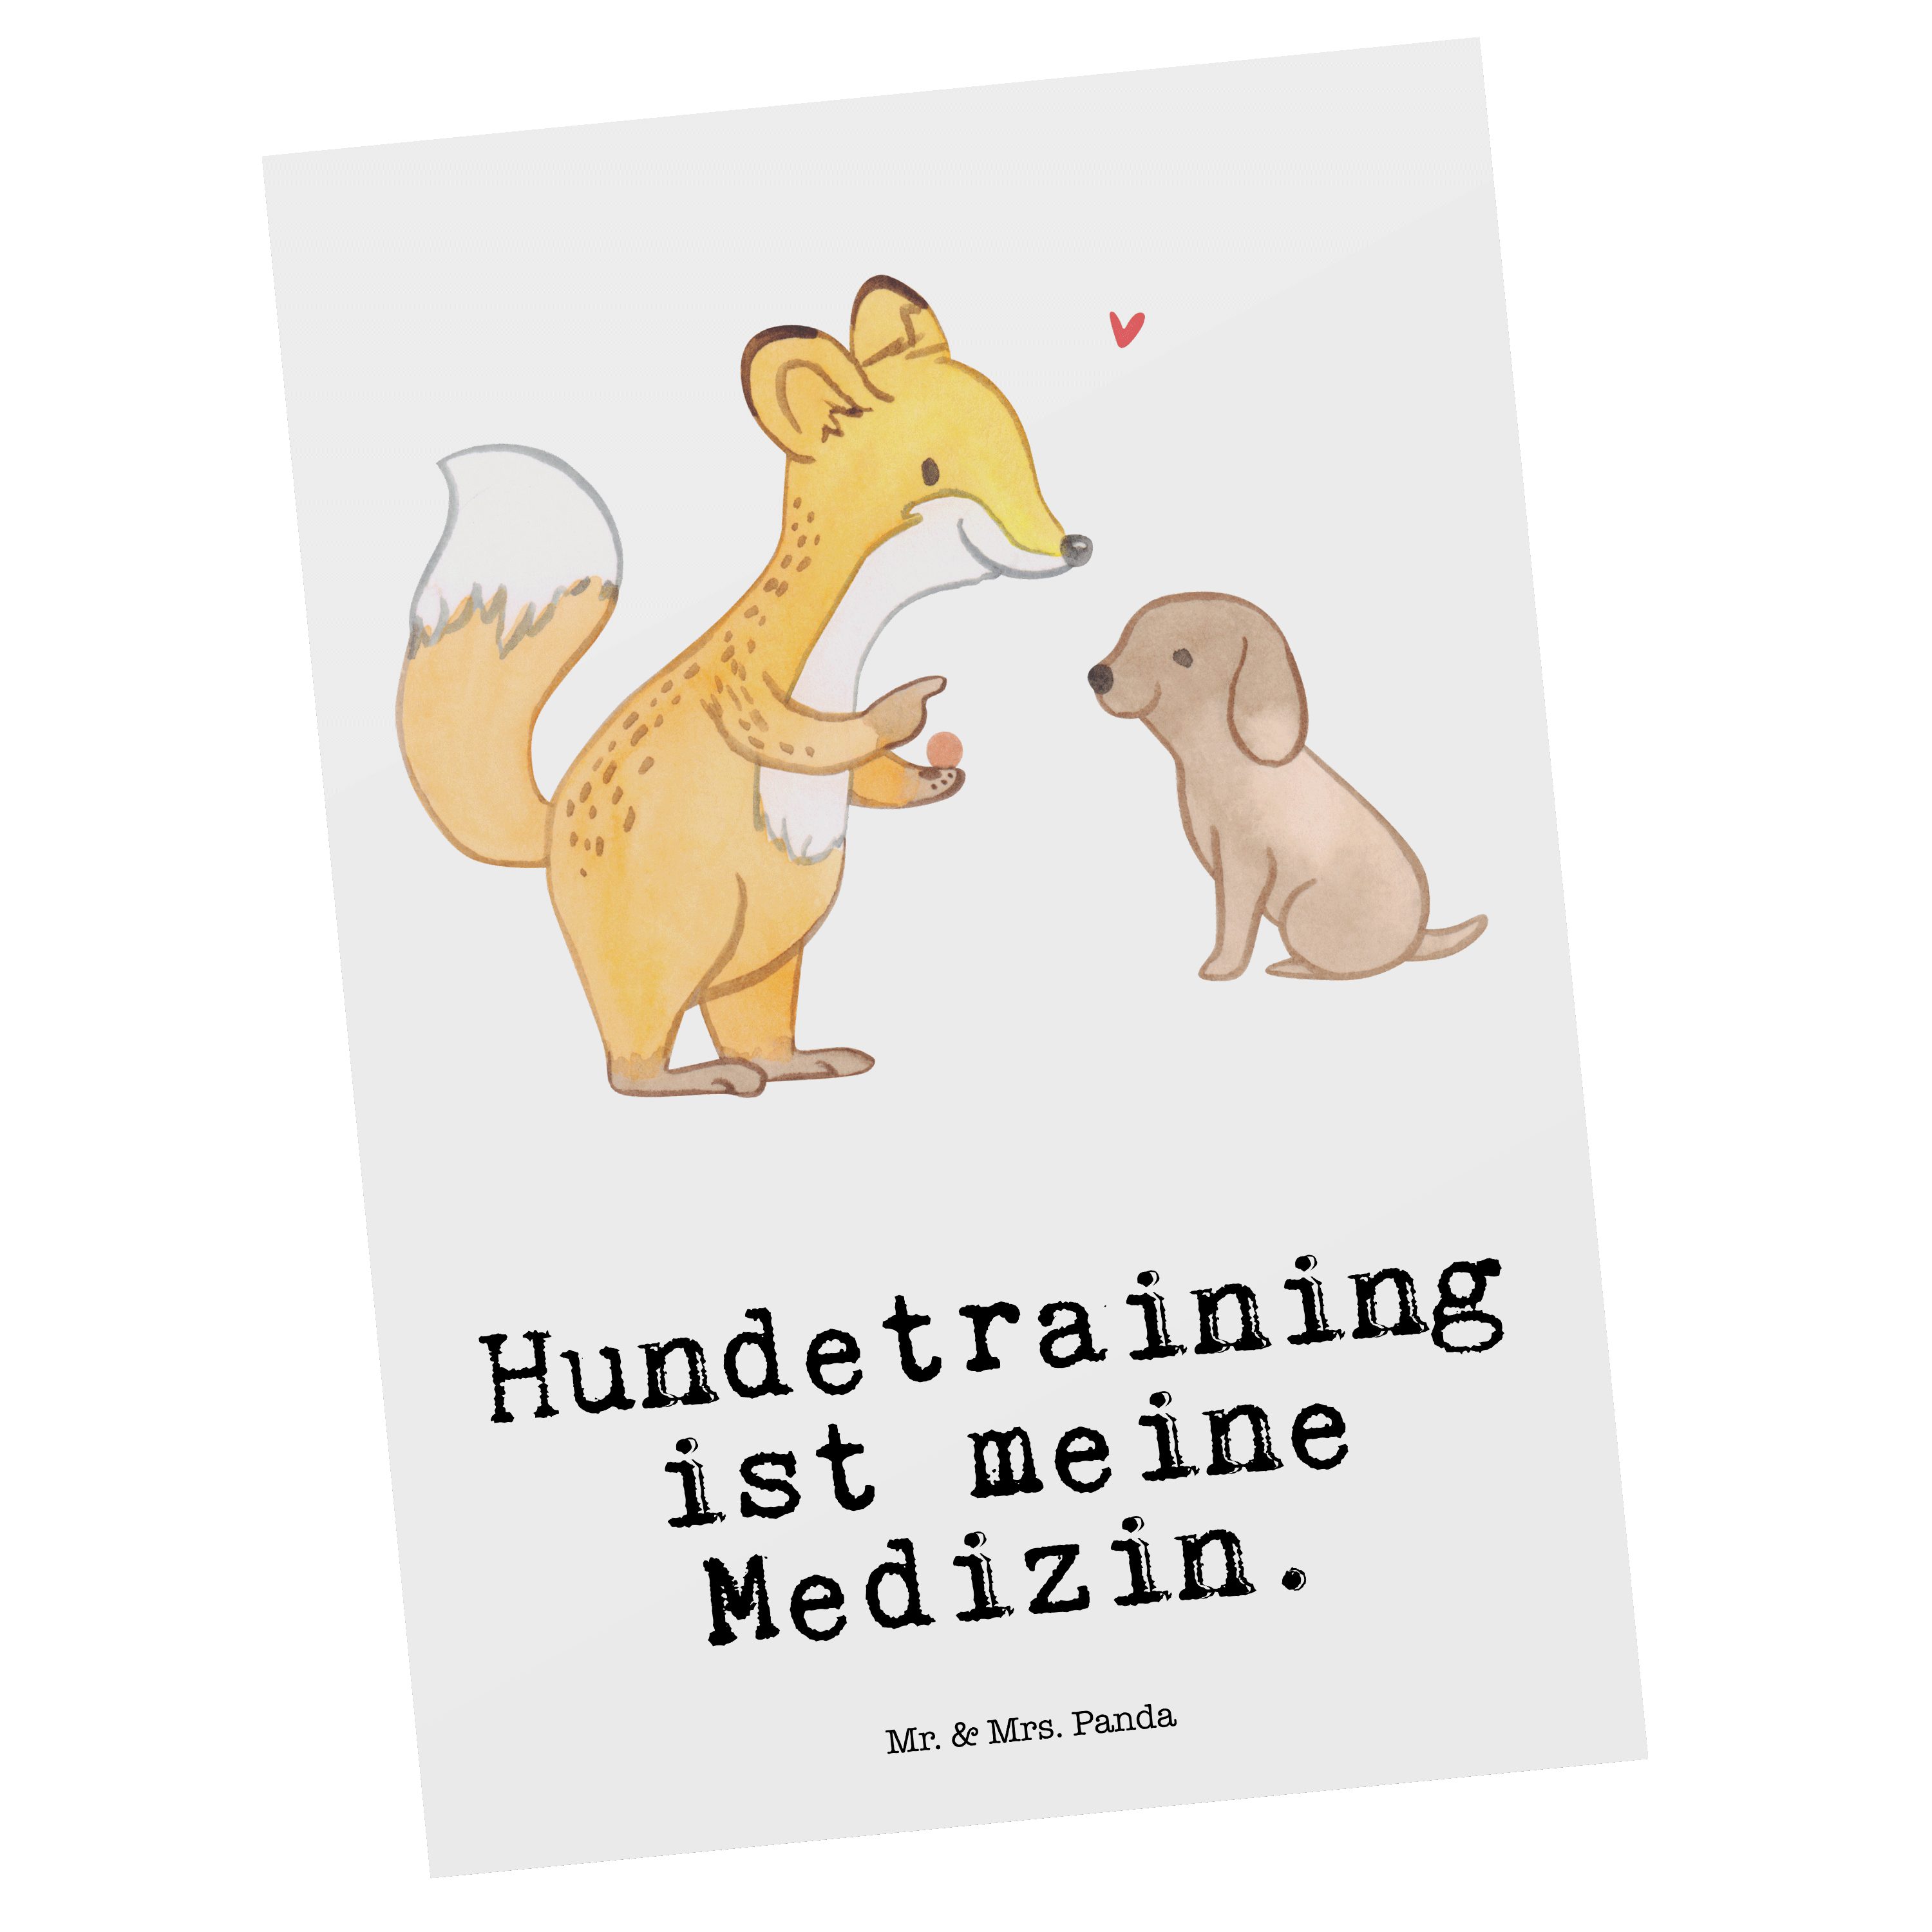 Mr. & Mrs. Panda Postkarte Fuchs Hundetraining Medizin - Weiß - Geschenk, Grußkarte, Welpenschul